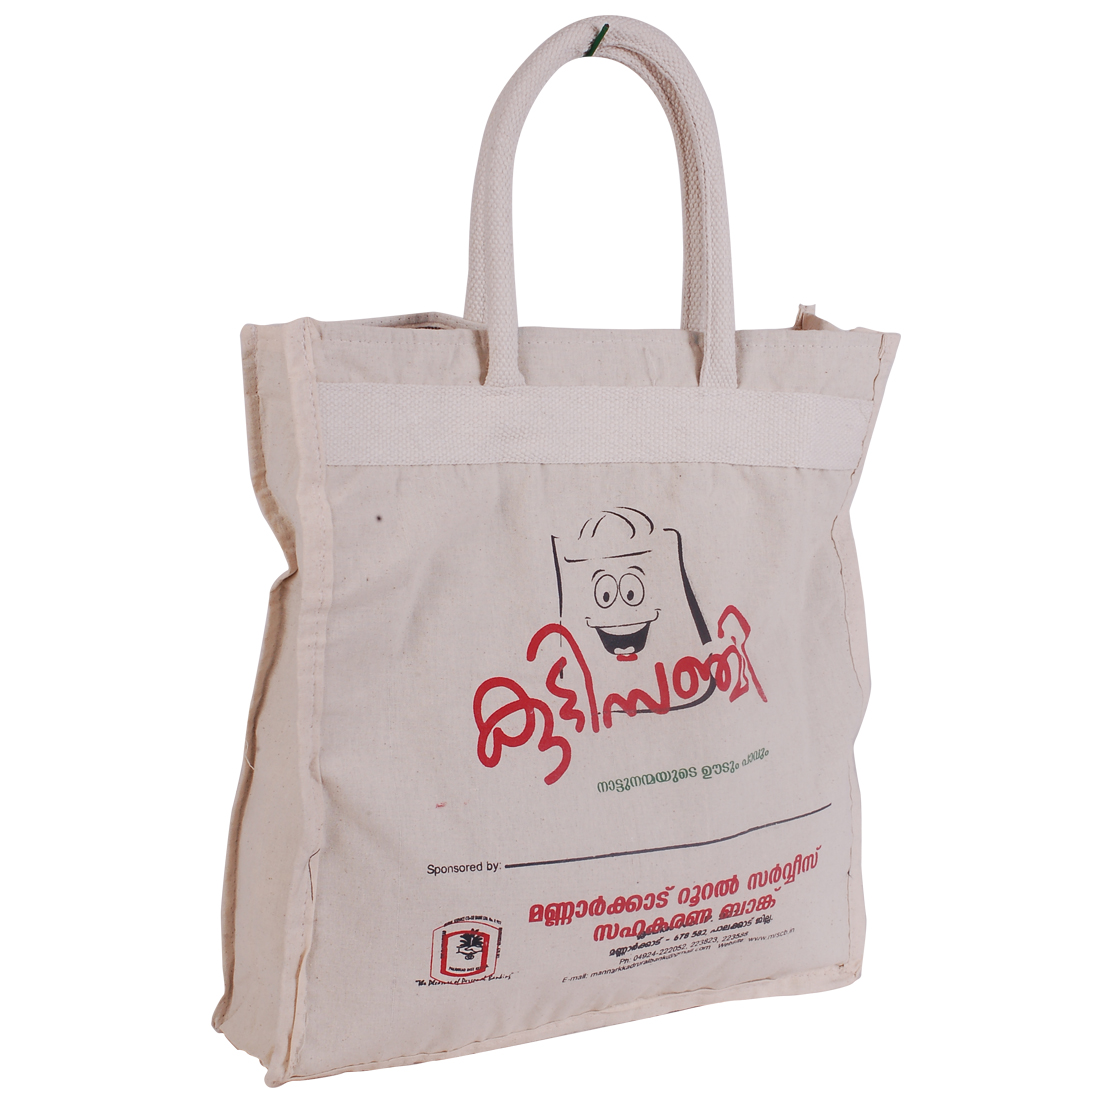 College bag essentials in tamil | College backpack essentials|Things Inside  my bag?|College bag Tips - YouTube